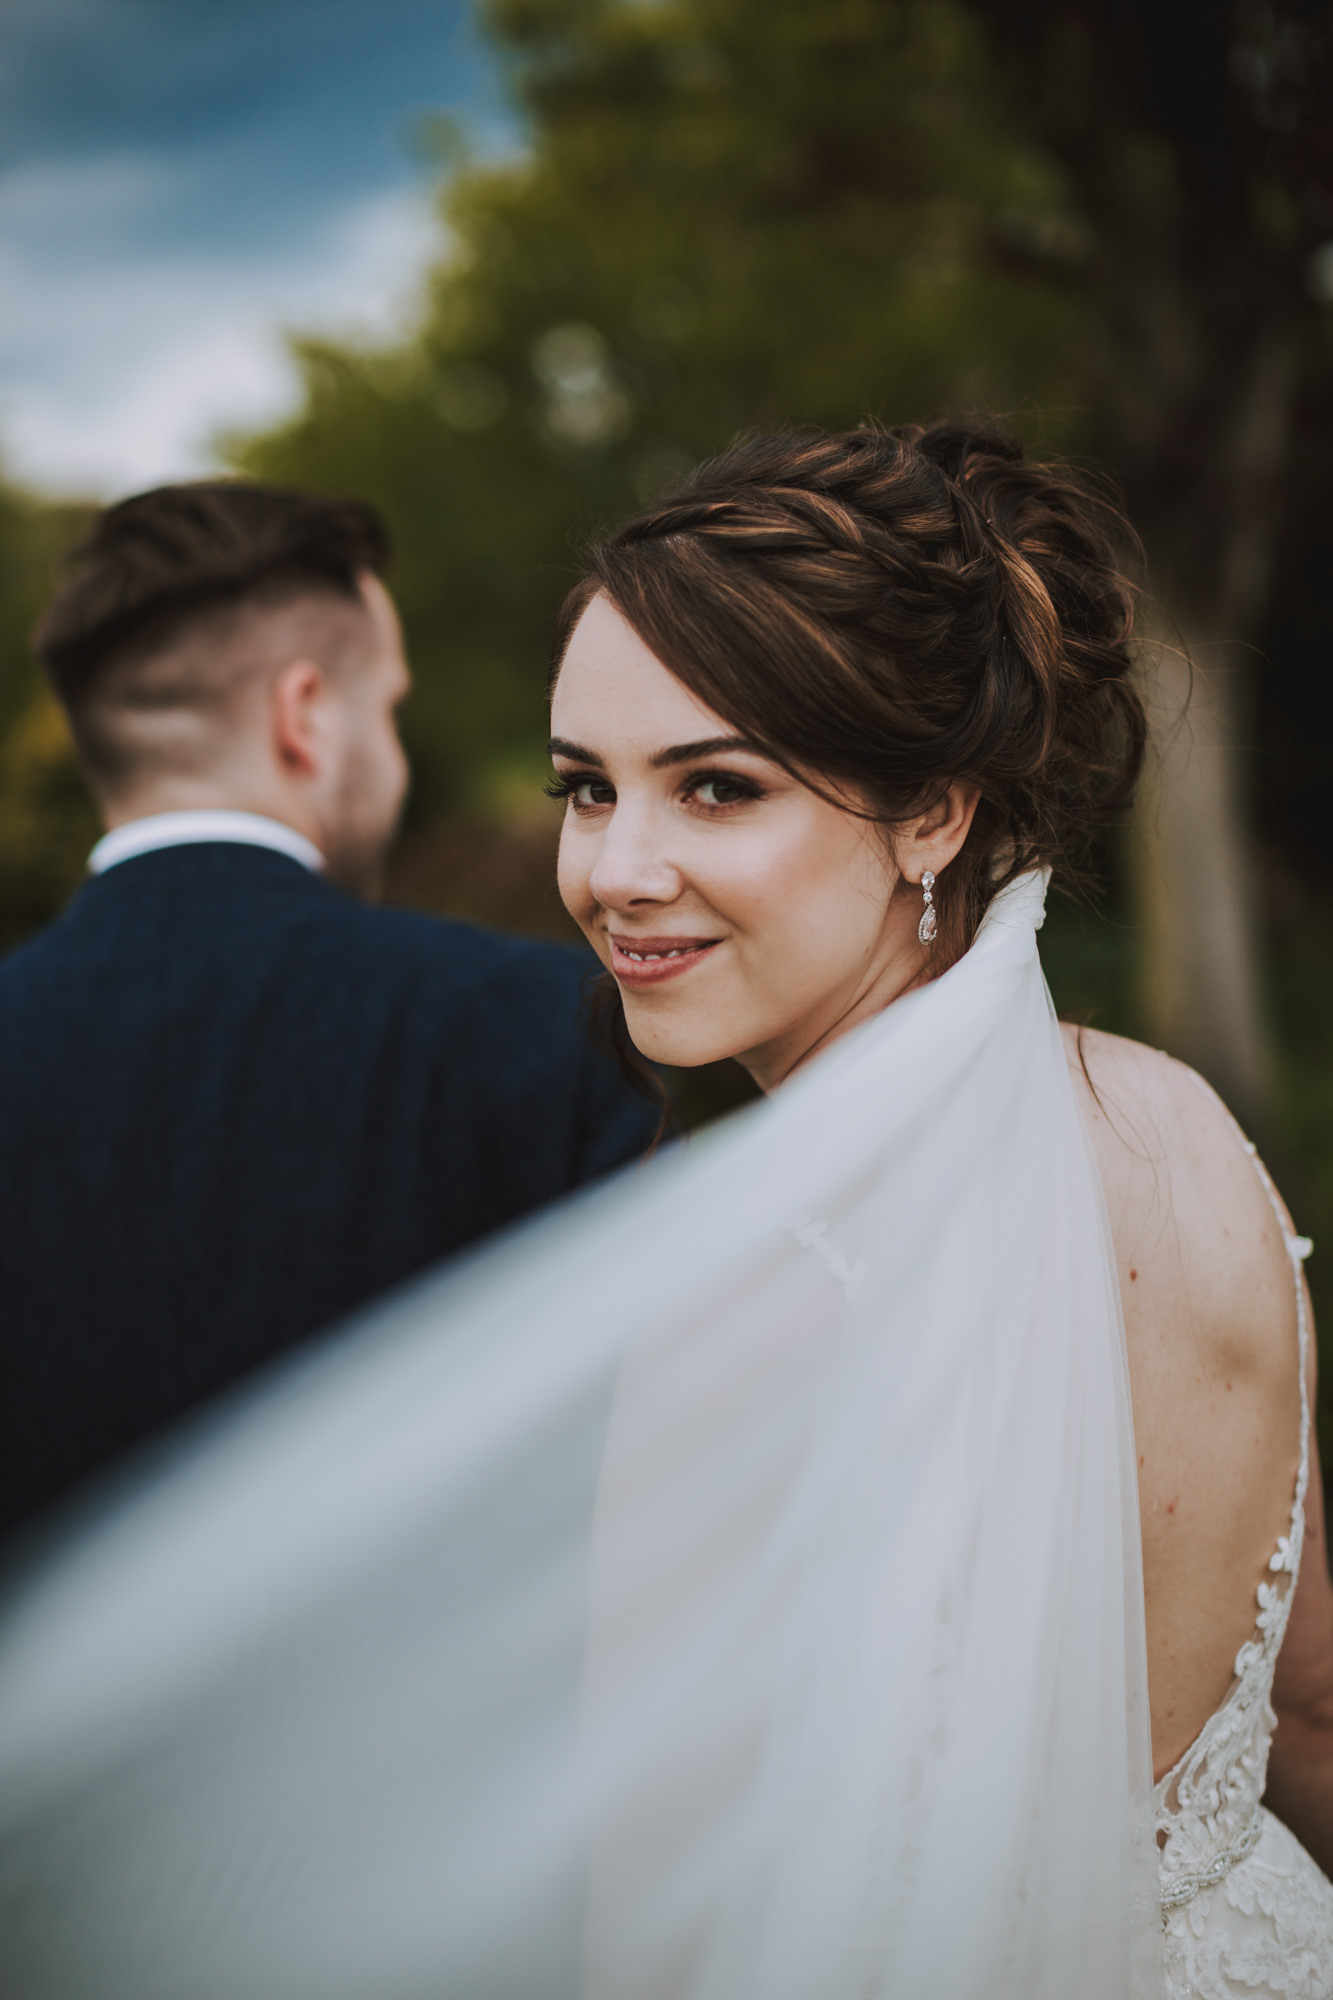 Unique wedding photographers South Yorkshire